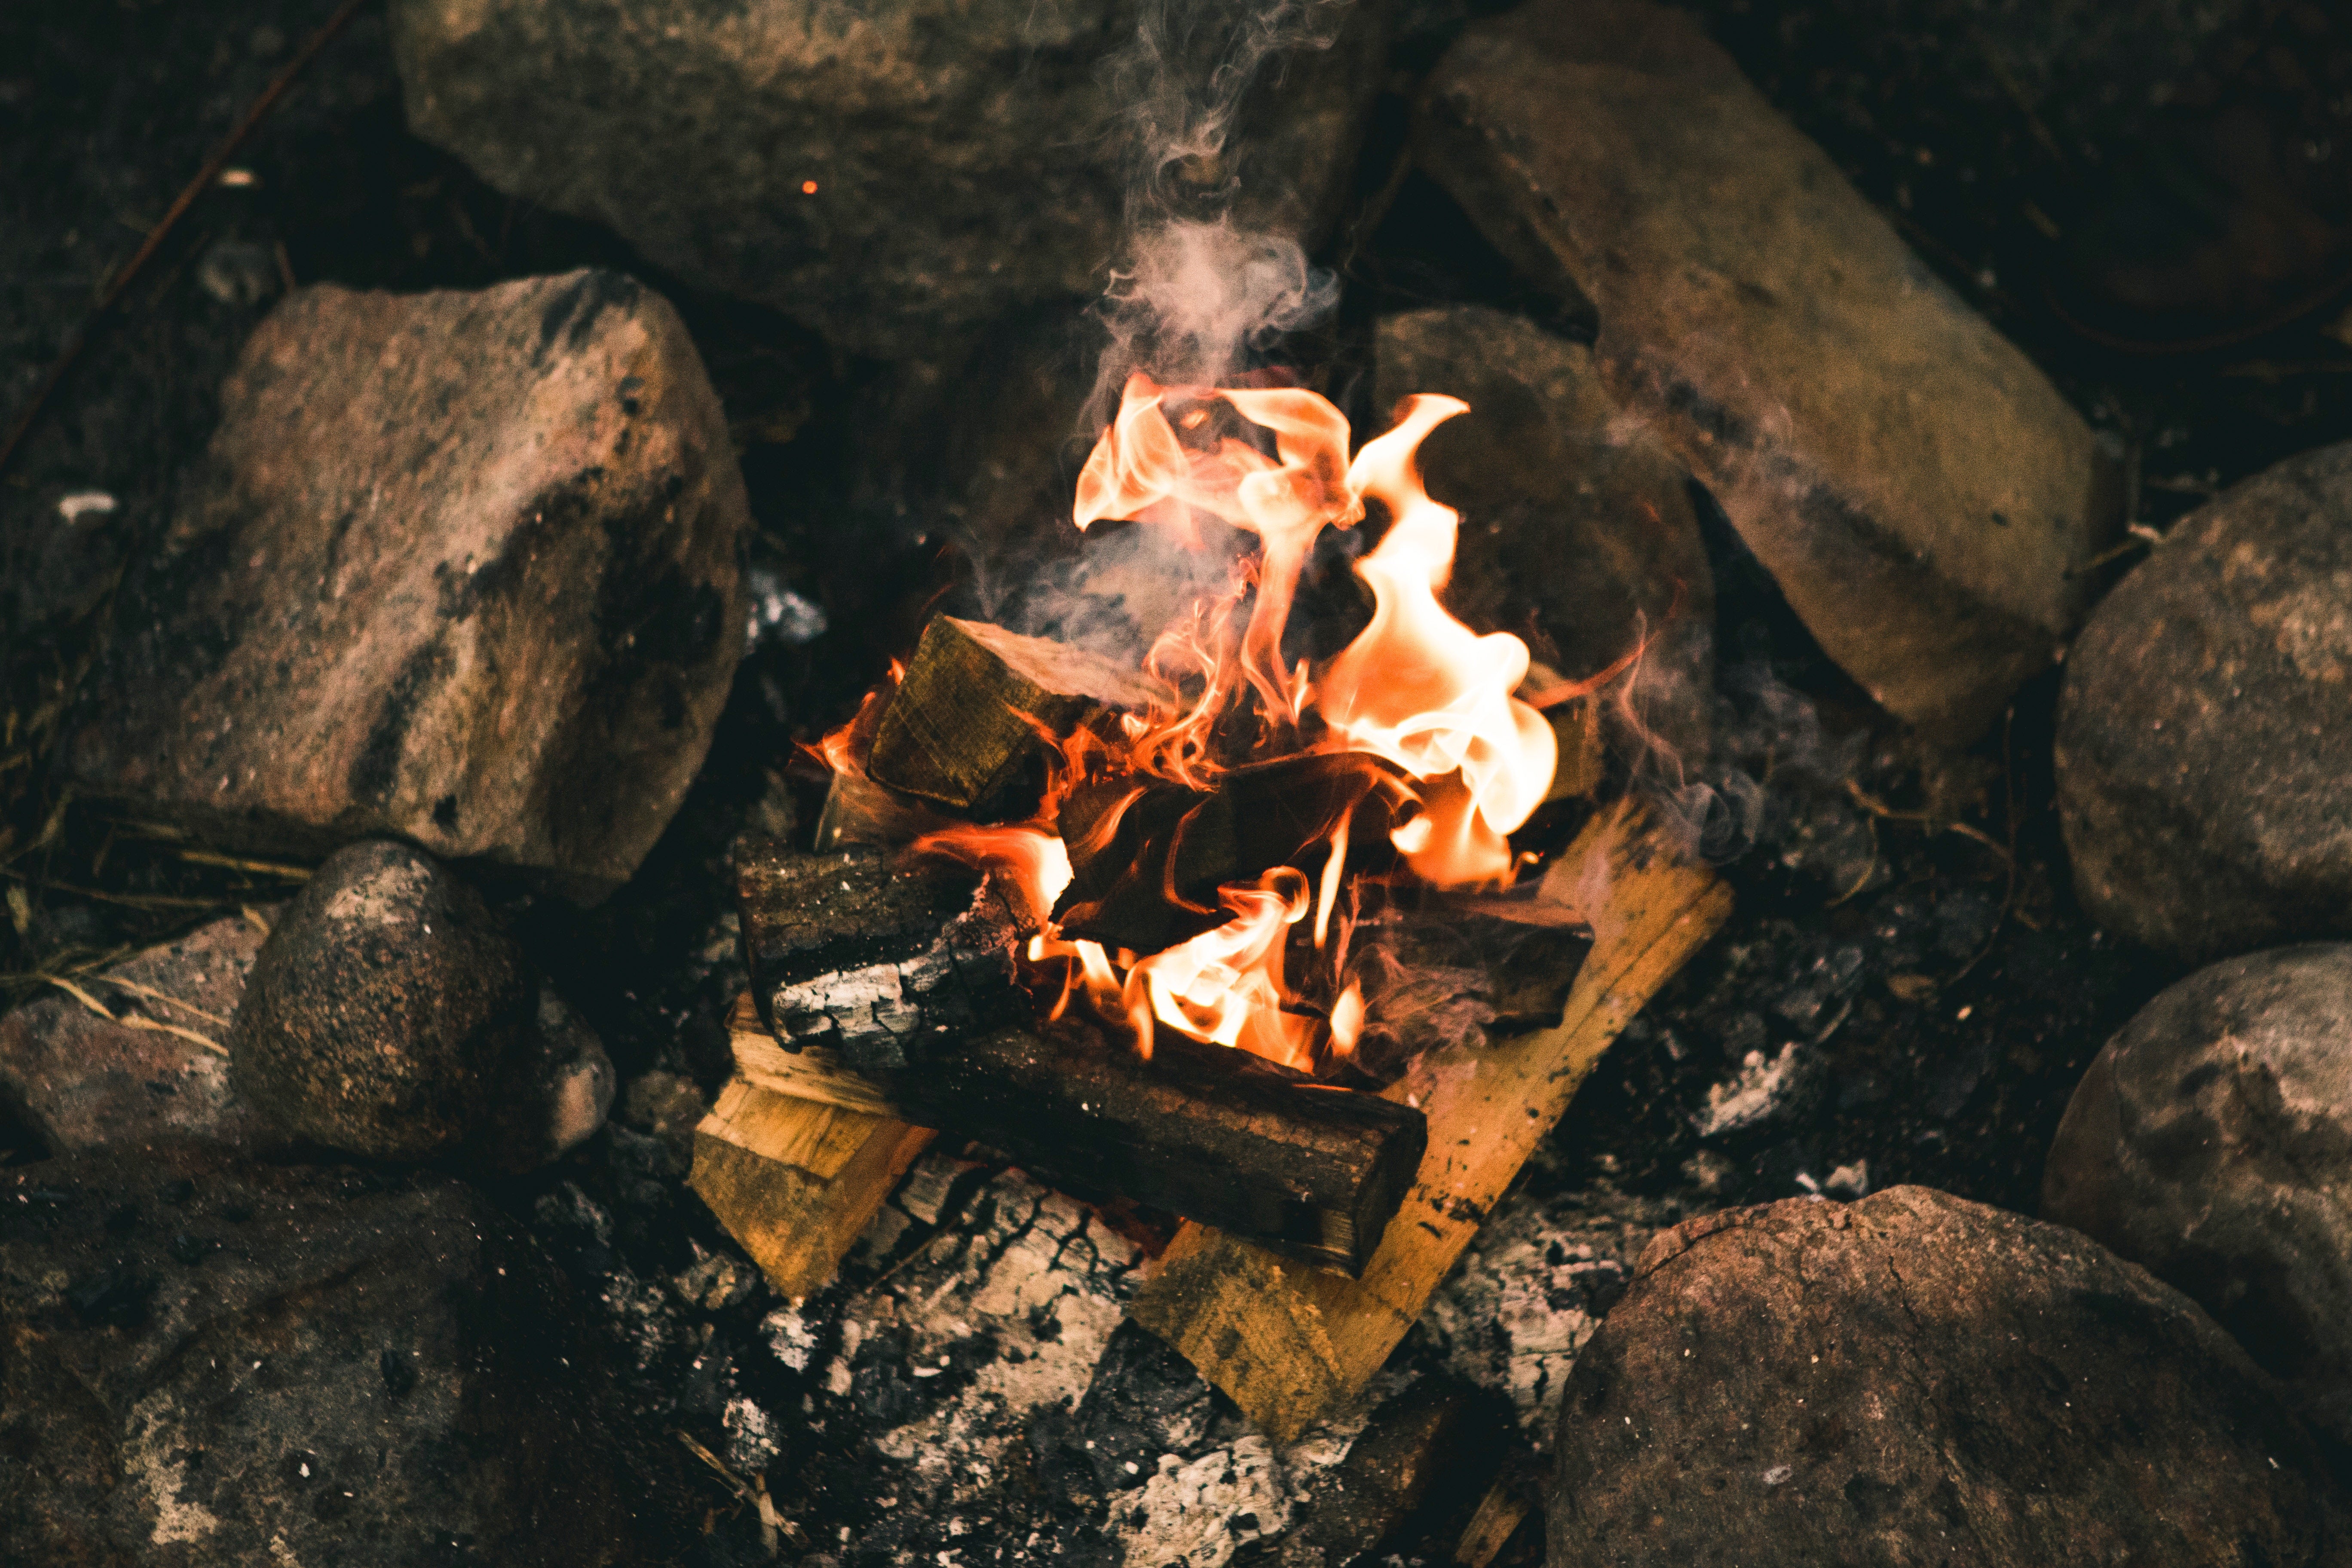 Wood Burning Chart  Survival skills, Wilderness survival, Survival